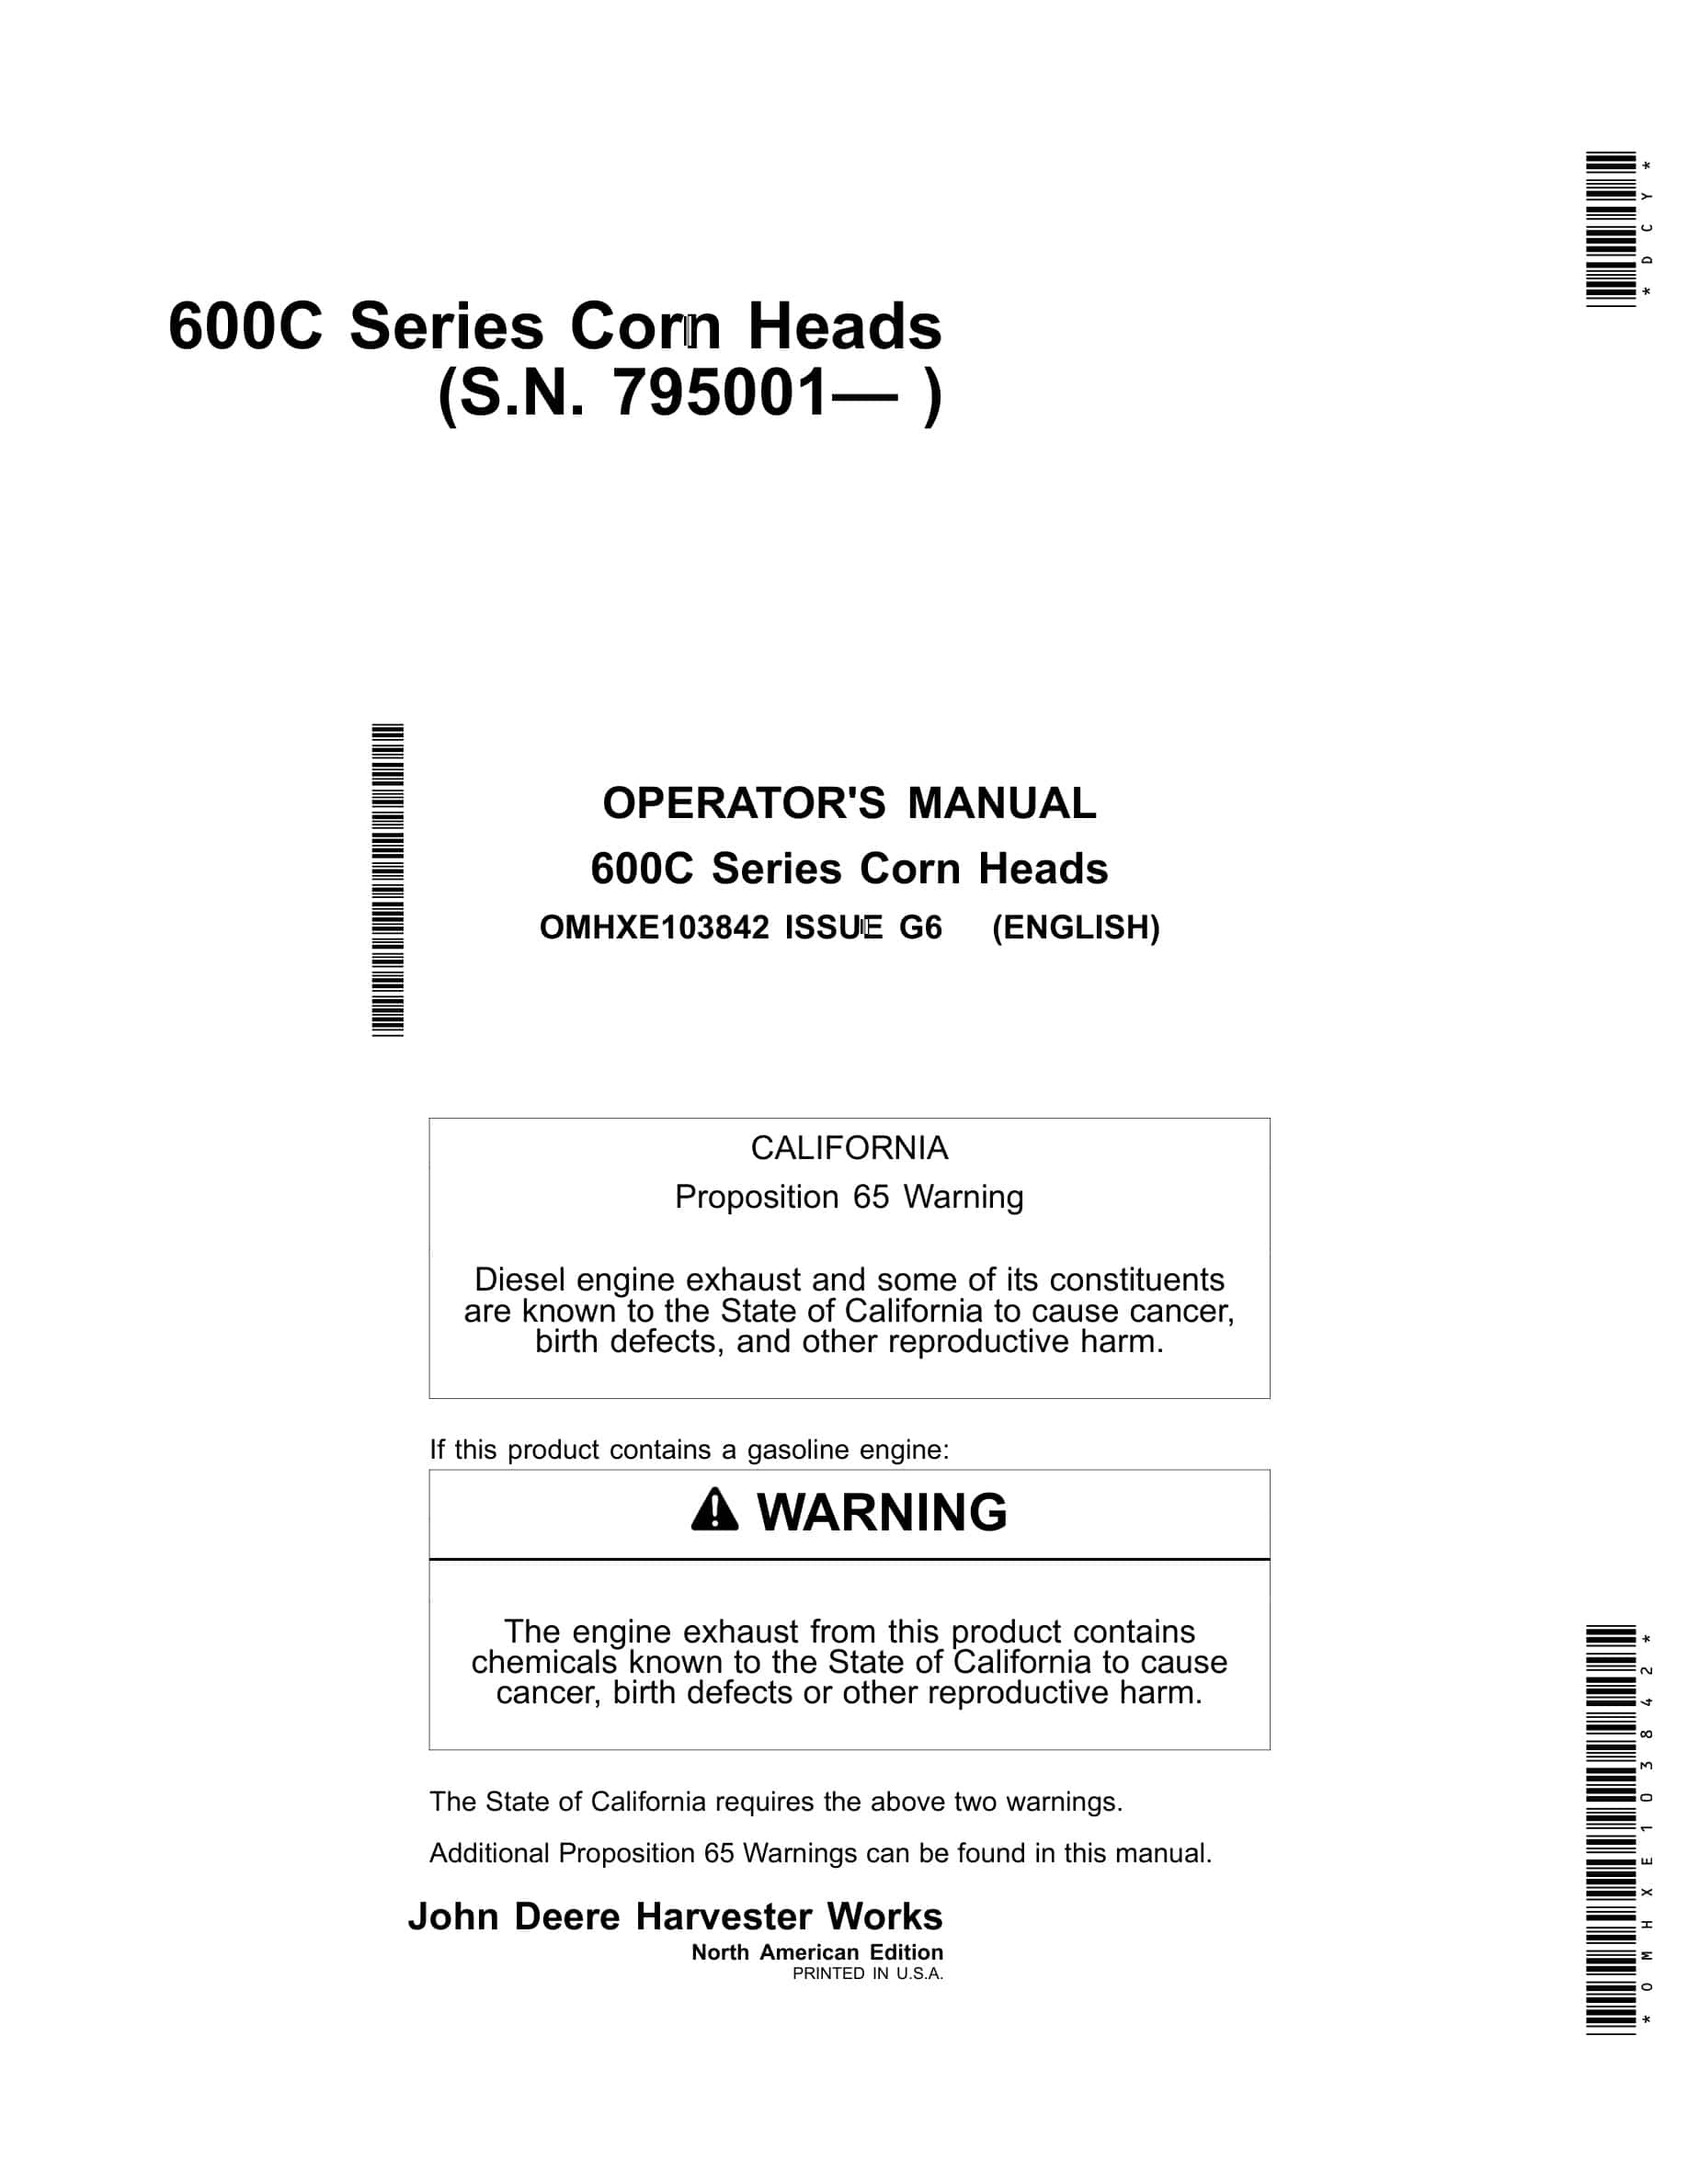 John Deere 600C Series Corn Heads Operator Manual OMHXE103842-1